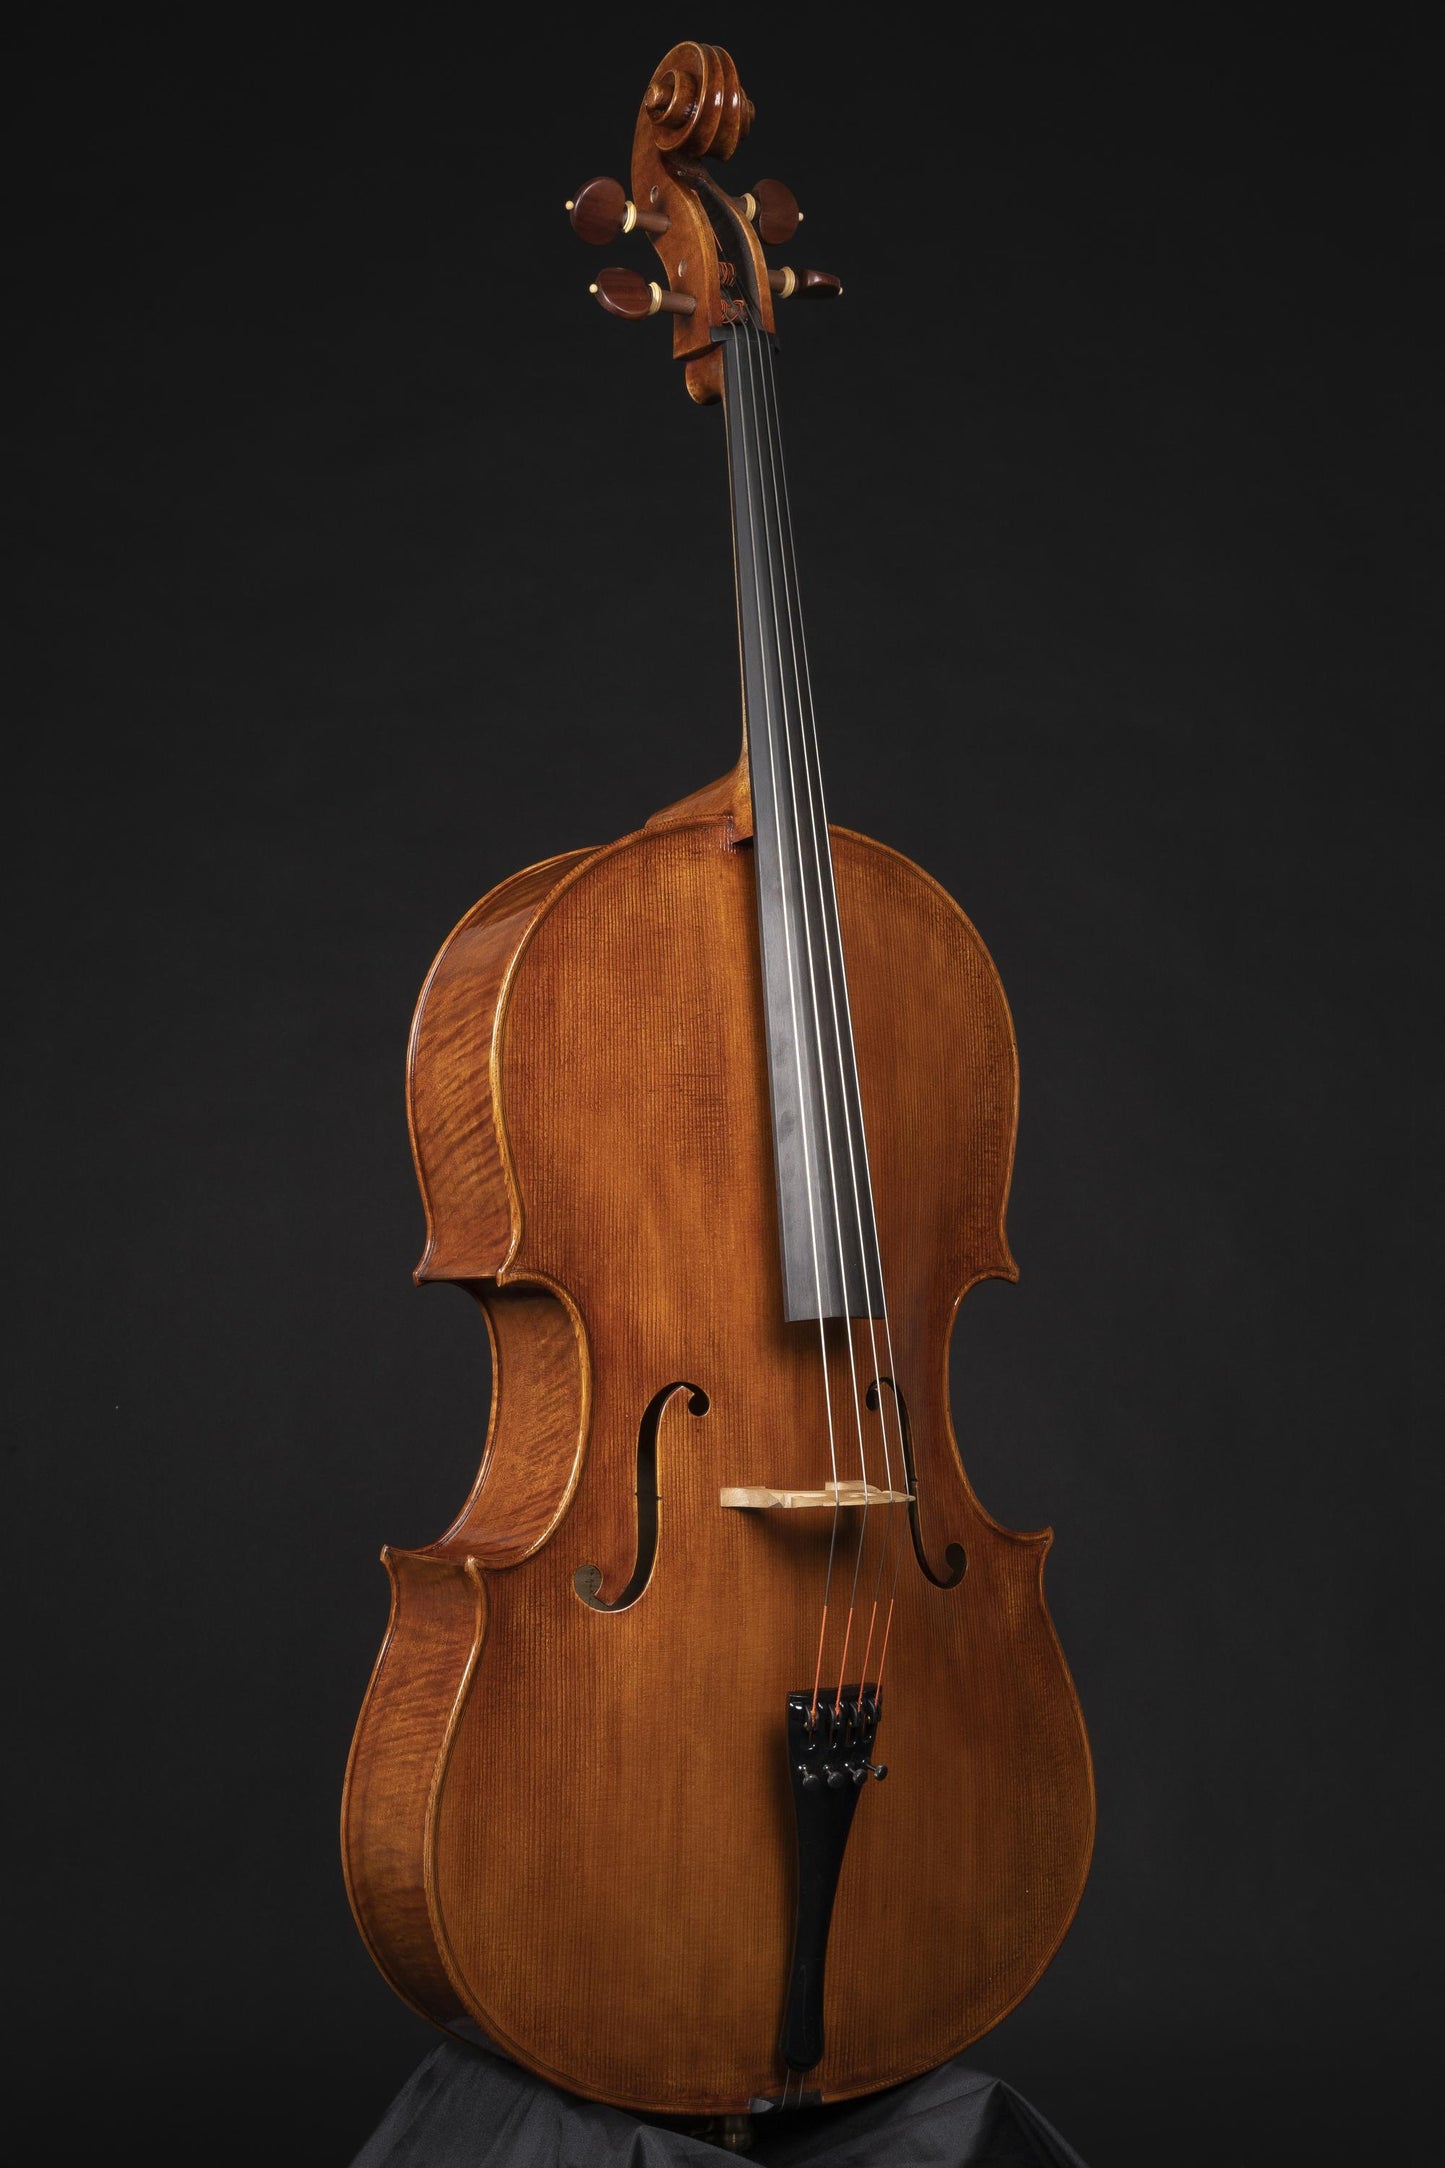 Vettori Paolo Cello 2022 Mod. Montagnana Sleeping Beauty "Leon Battista Alberti" 2022